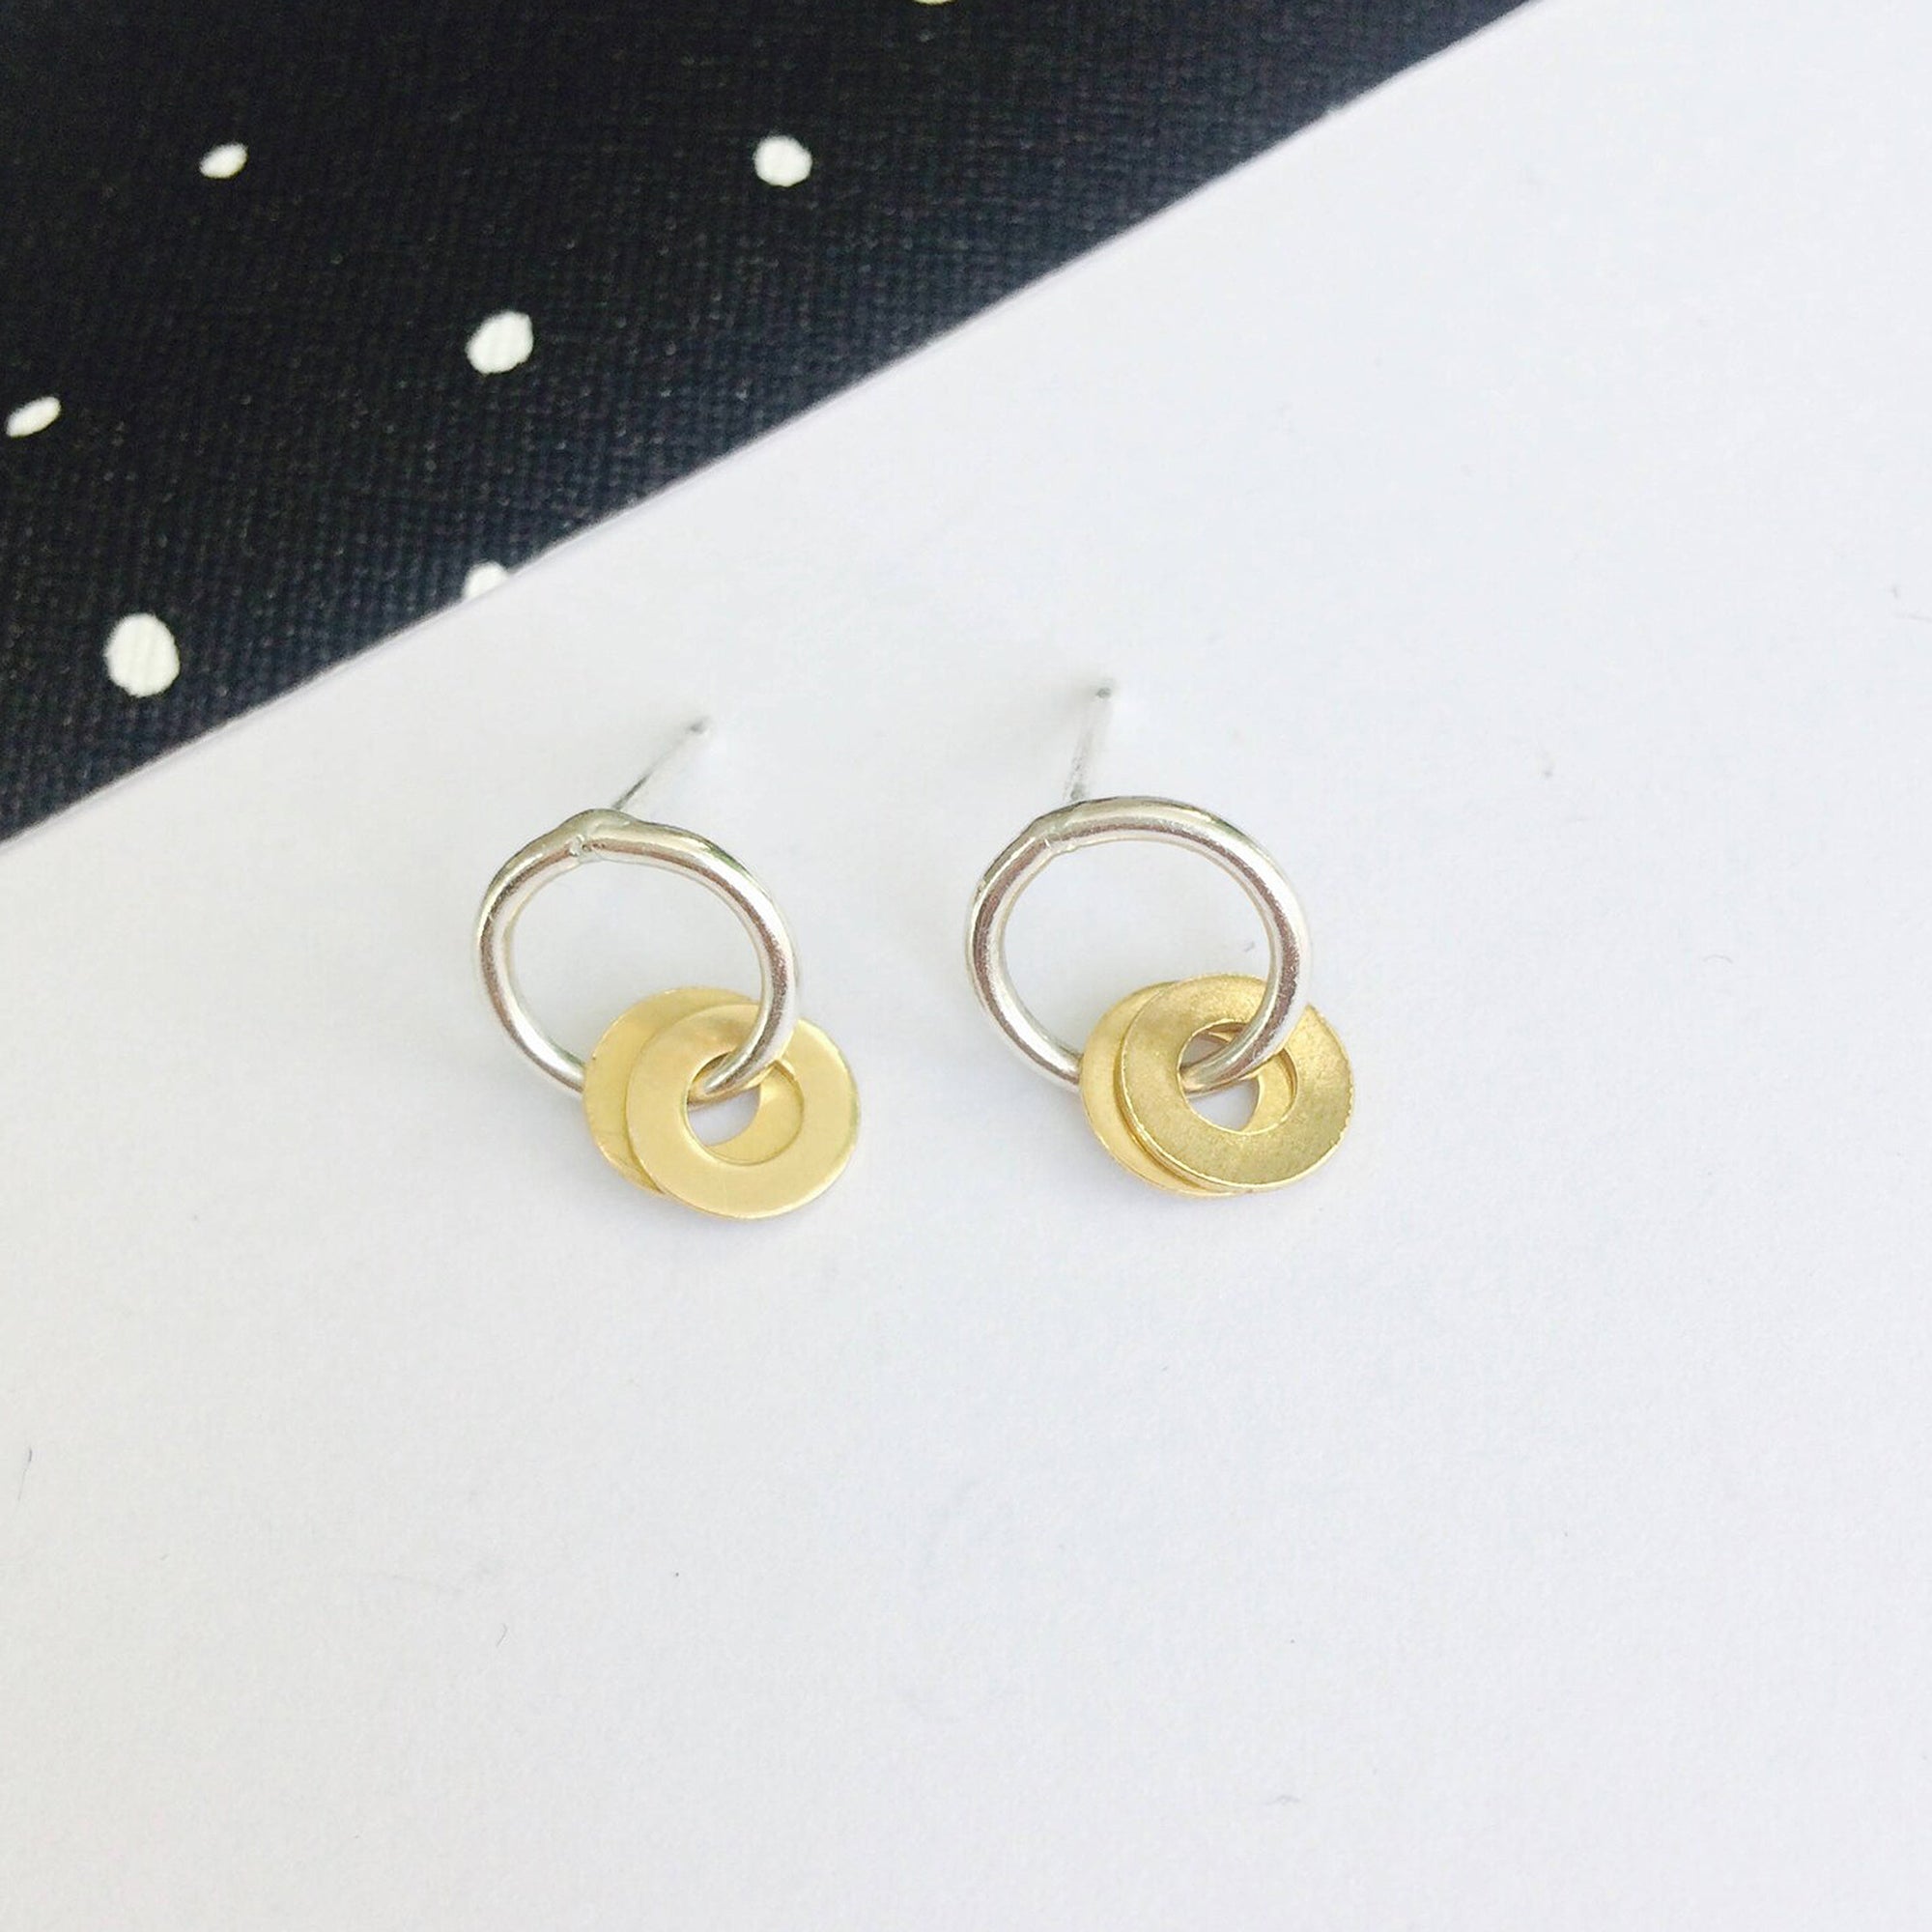 Silver and brass dangle earrings